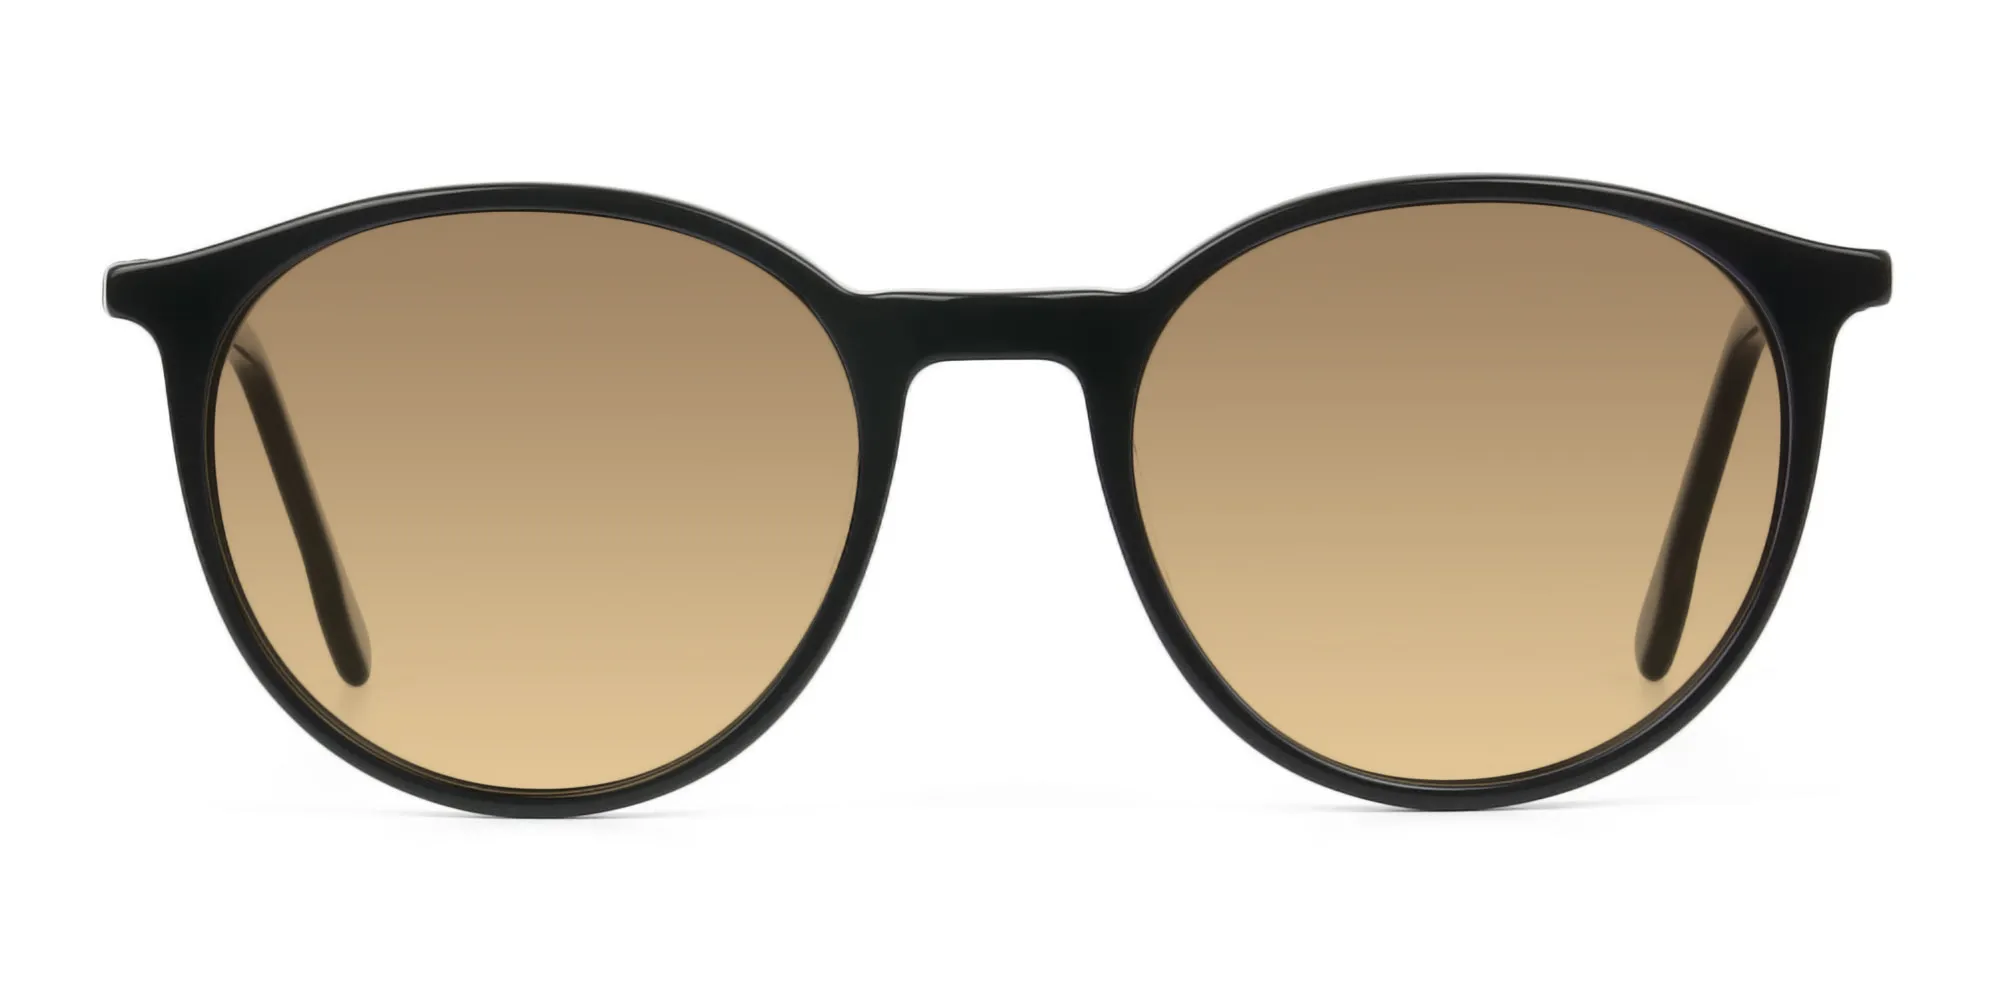 Dark-brown-black-round-sunglasses - 2